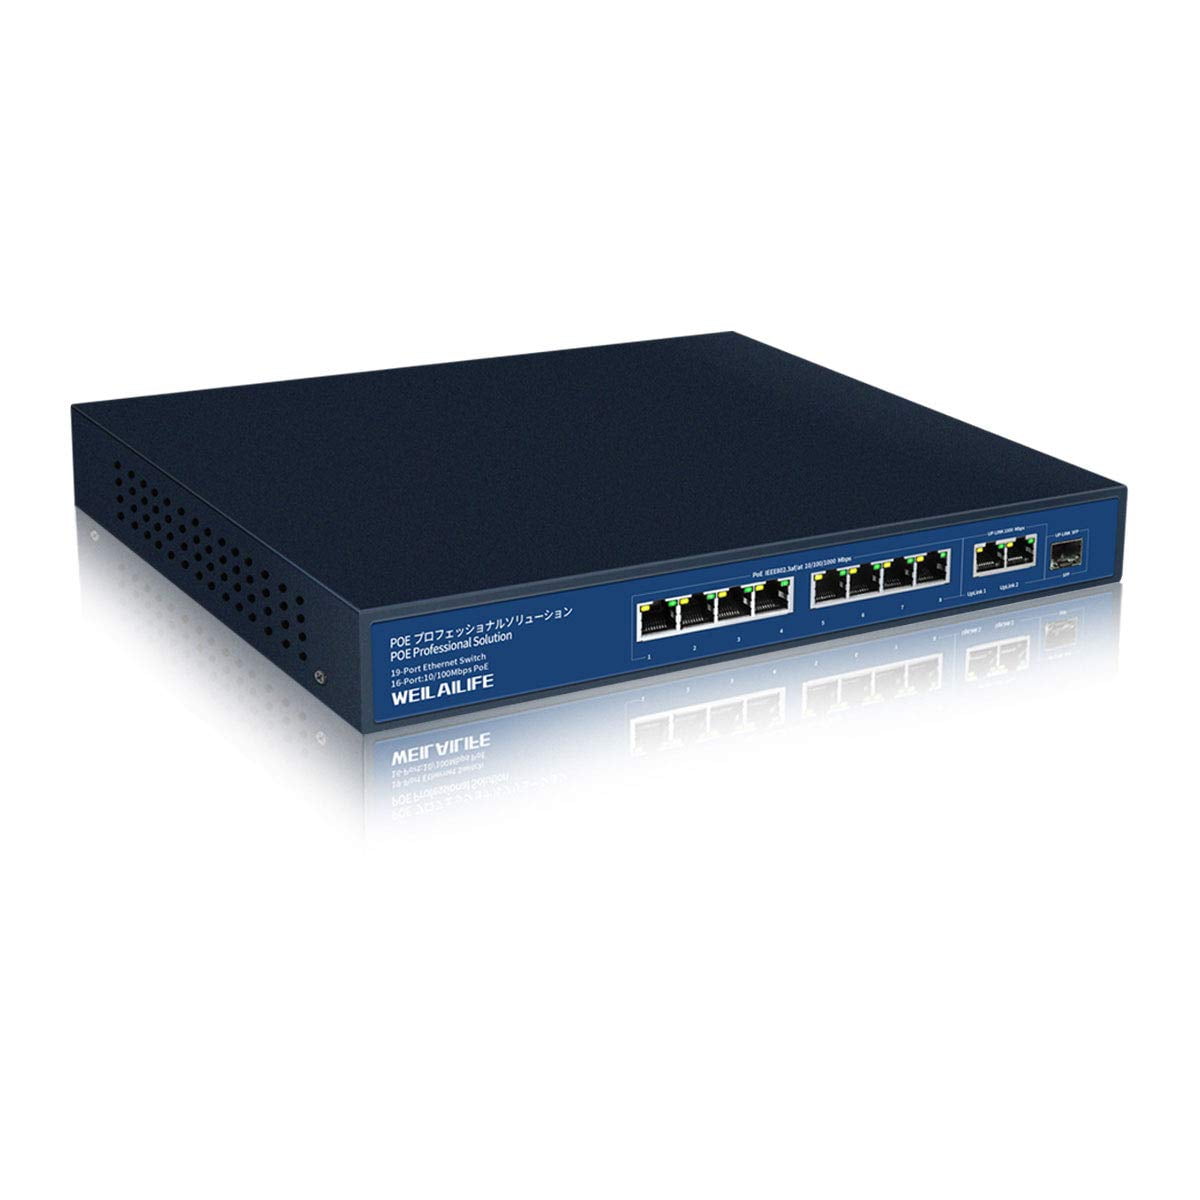 SIEYIO 2 Port 10/100/1000Mbps Network RJ45 LAN CAT6 Network Switch